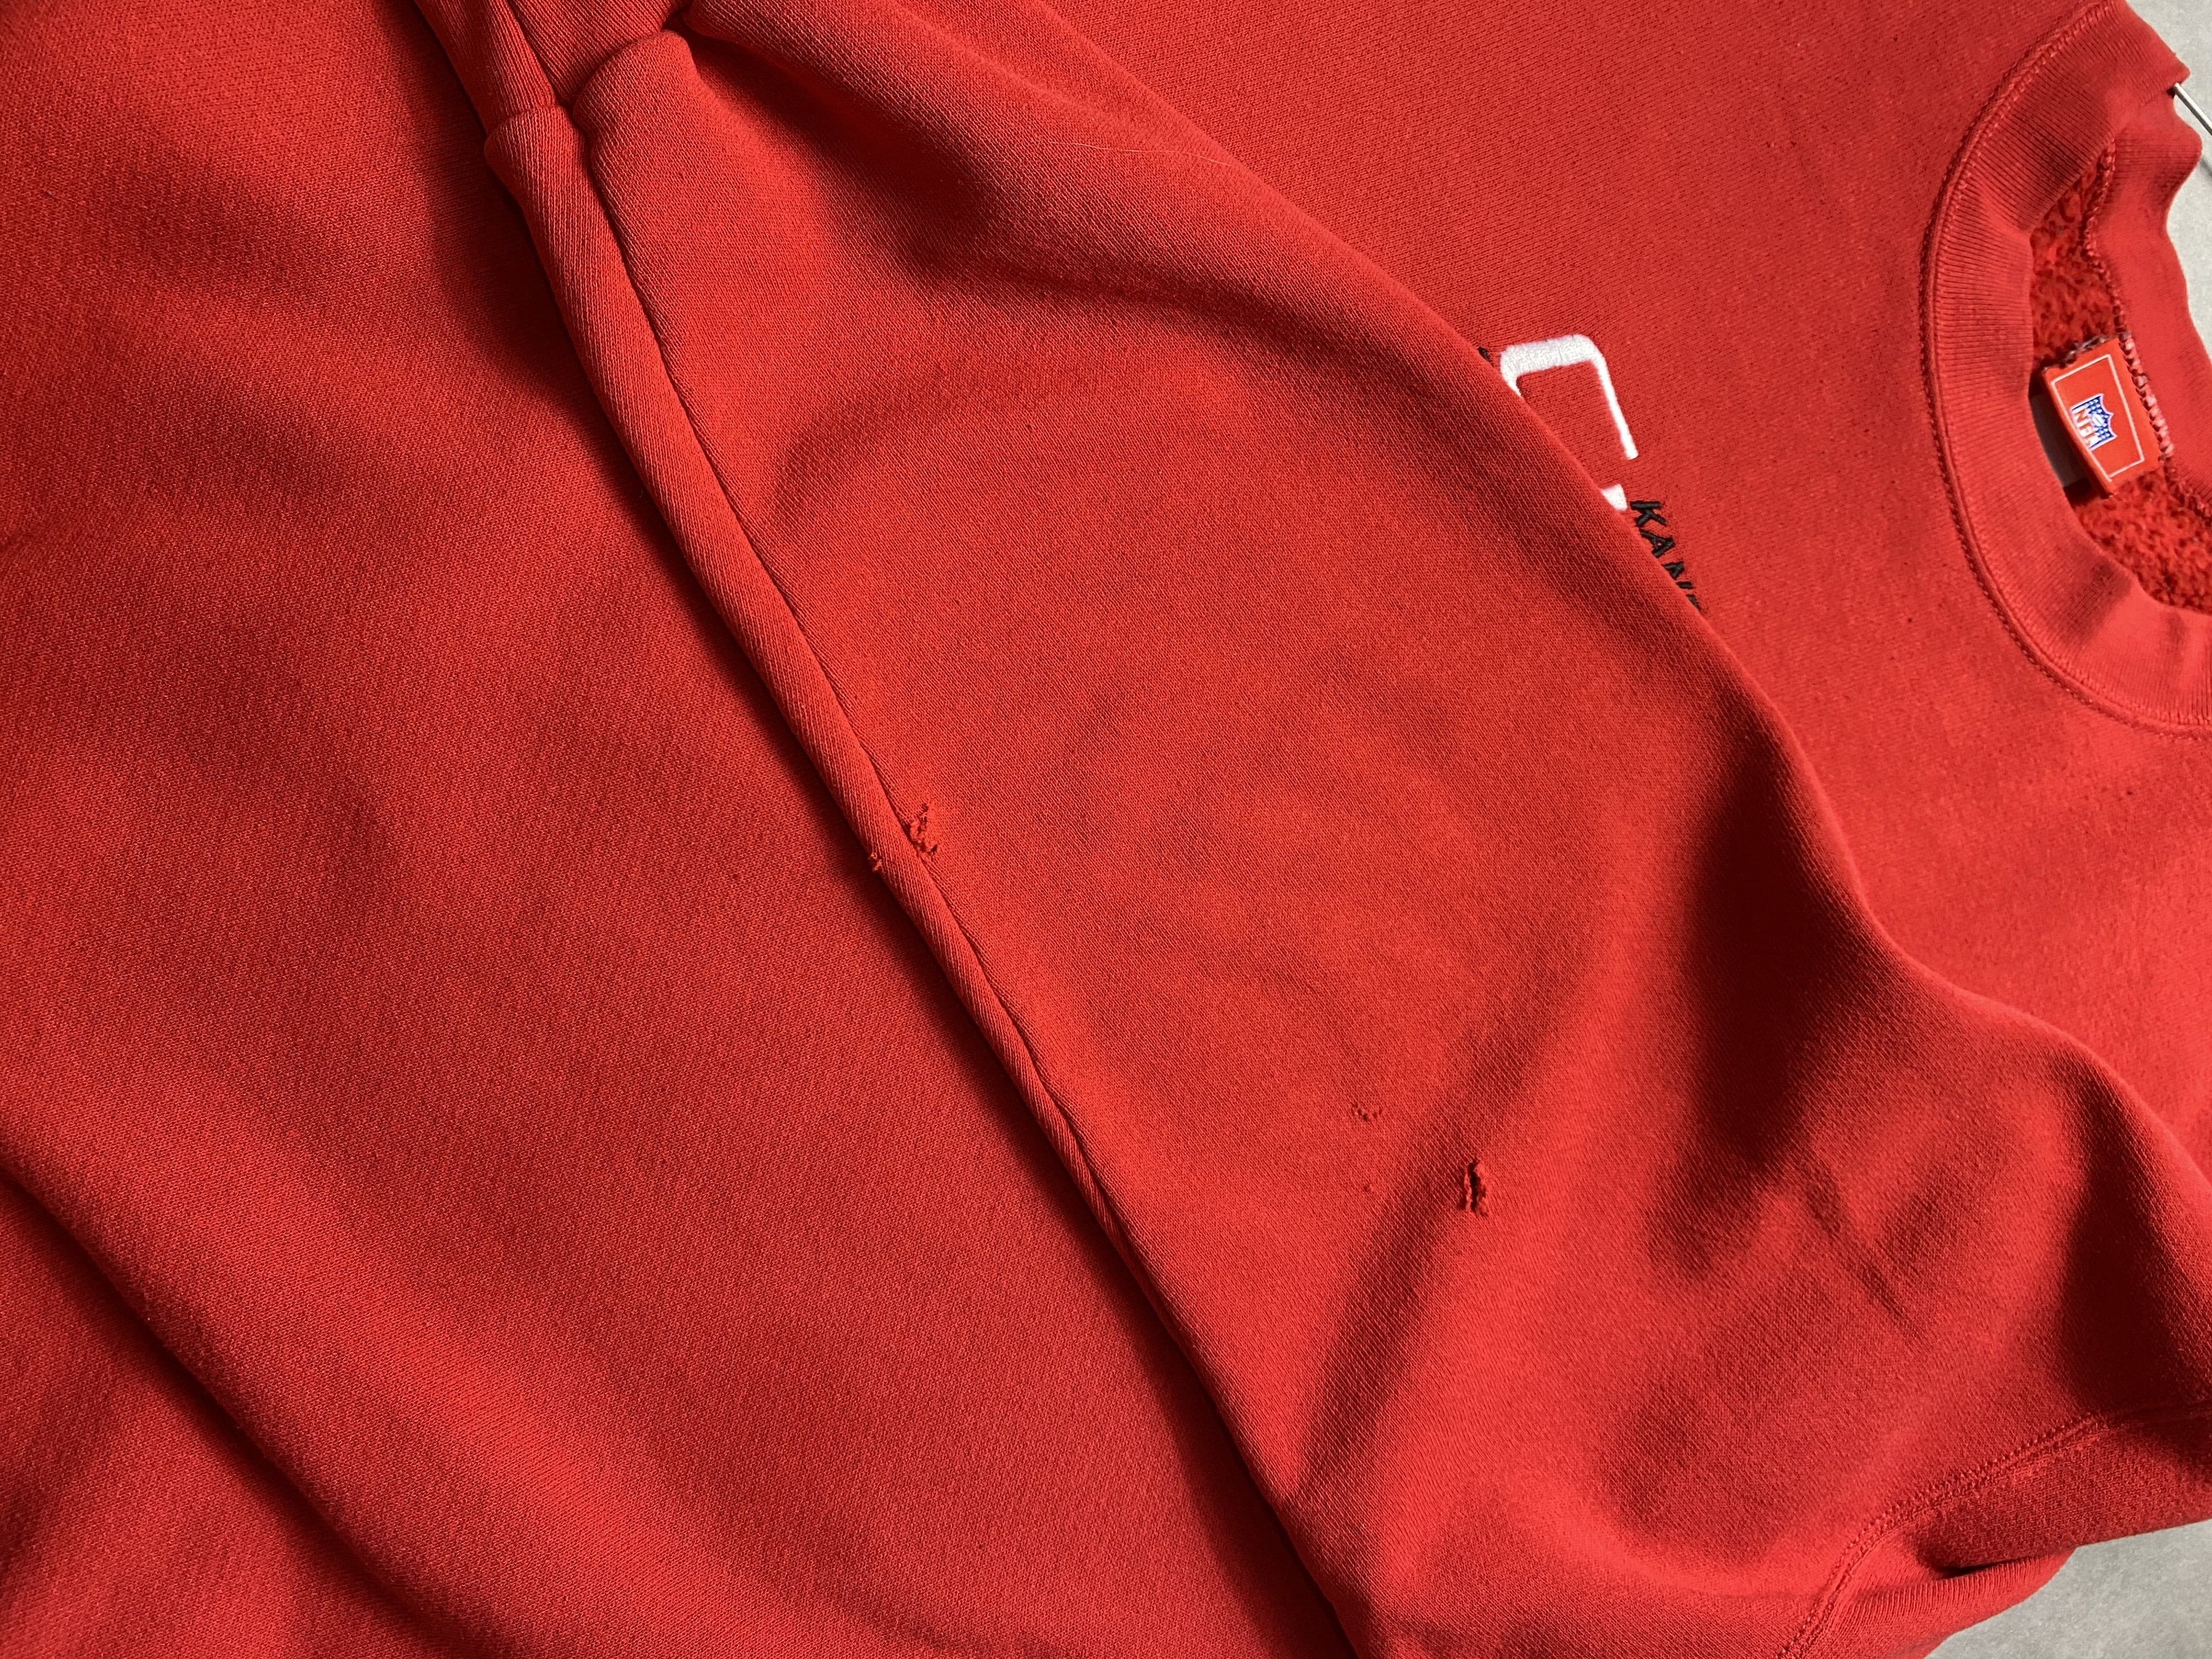 NFL Kansas City Chiefs Embroidered Logo Sweatshirt Red // XXL - RHAGHOUSE VINTAGE